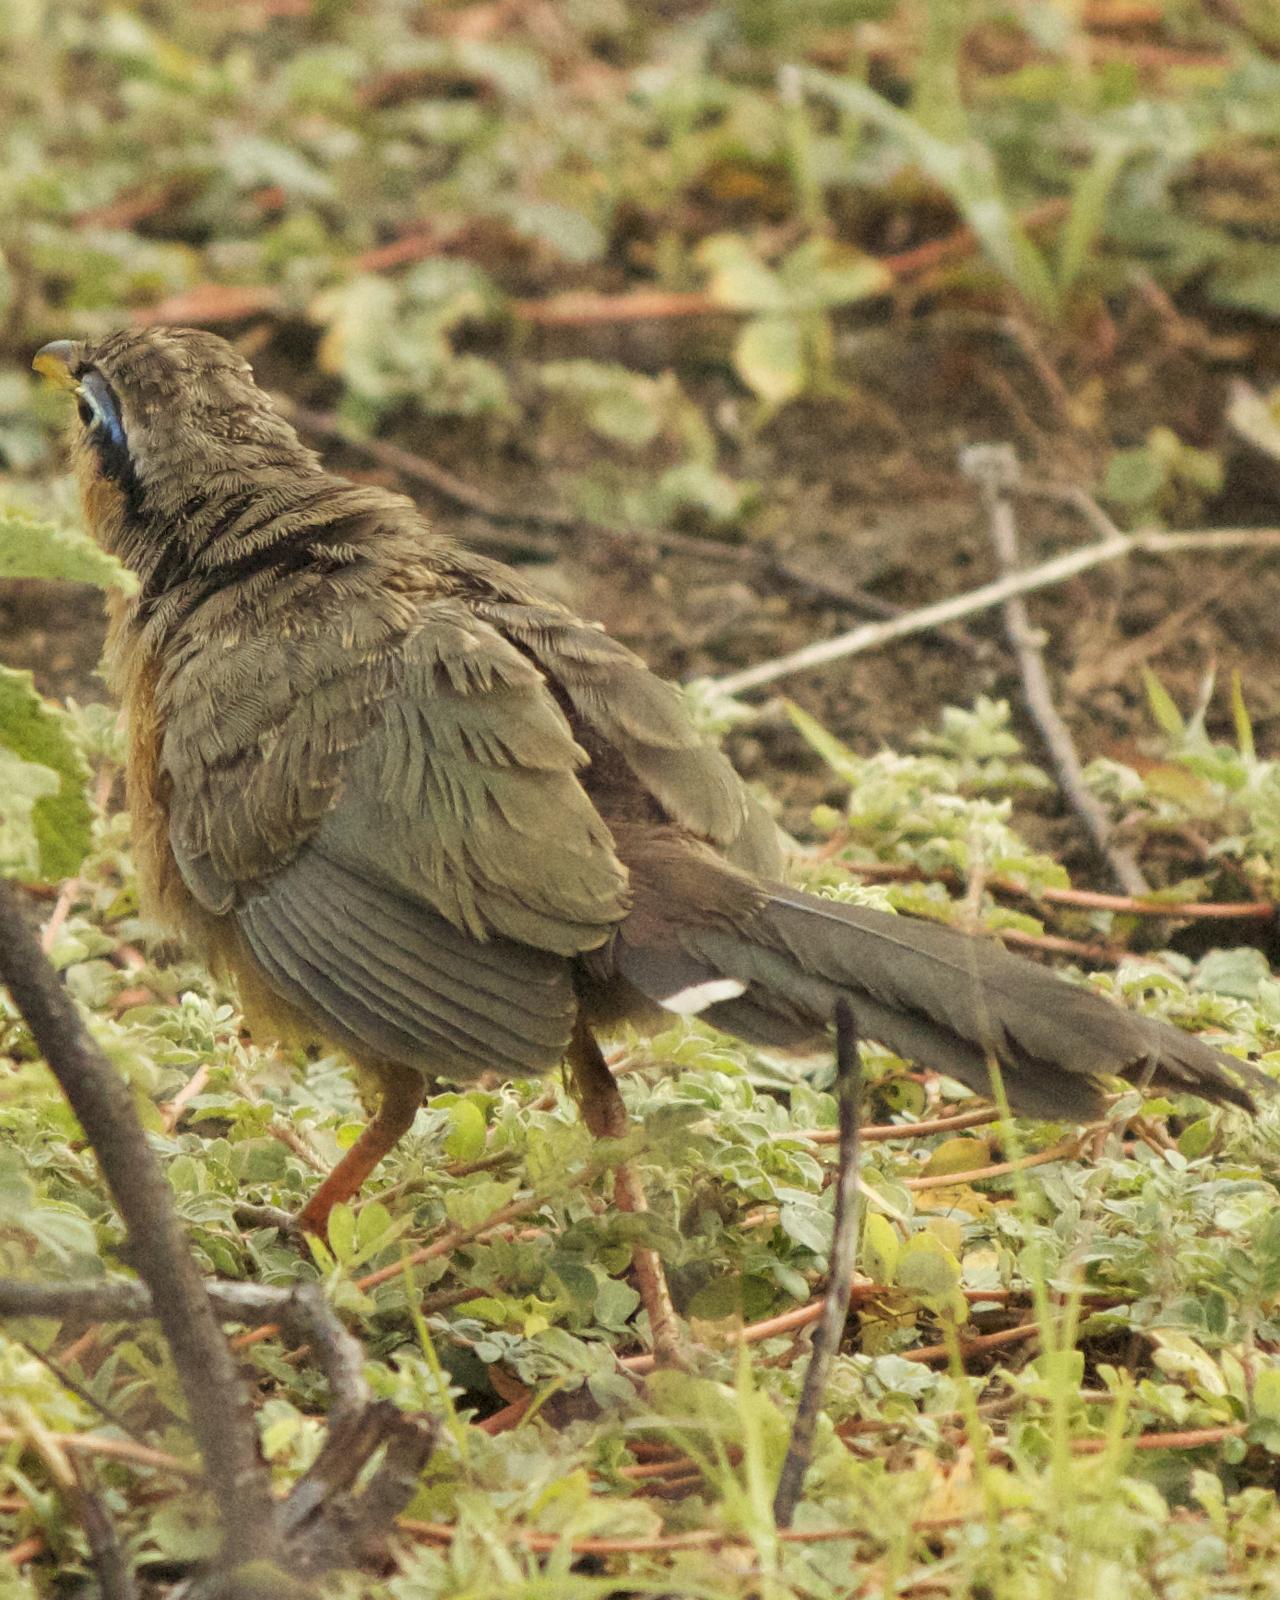 Lesser Ground-Cuckoo Photo by Mark Baldwin